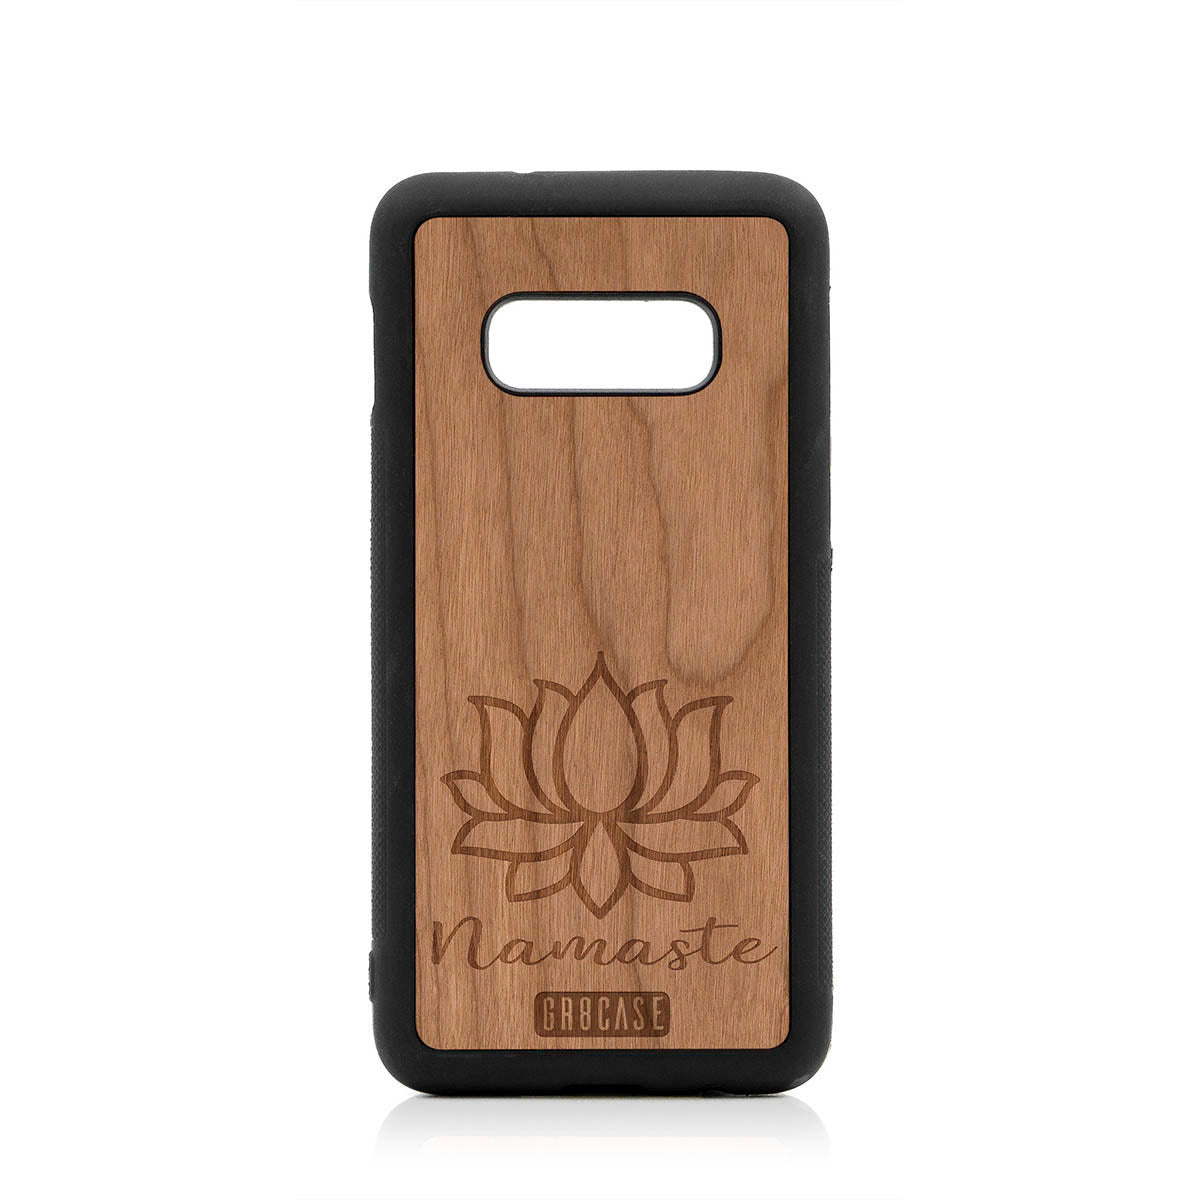 Namaste (Lotus Flower) Design Wood Case For Samsung Galaxy S10E